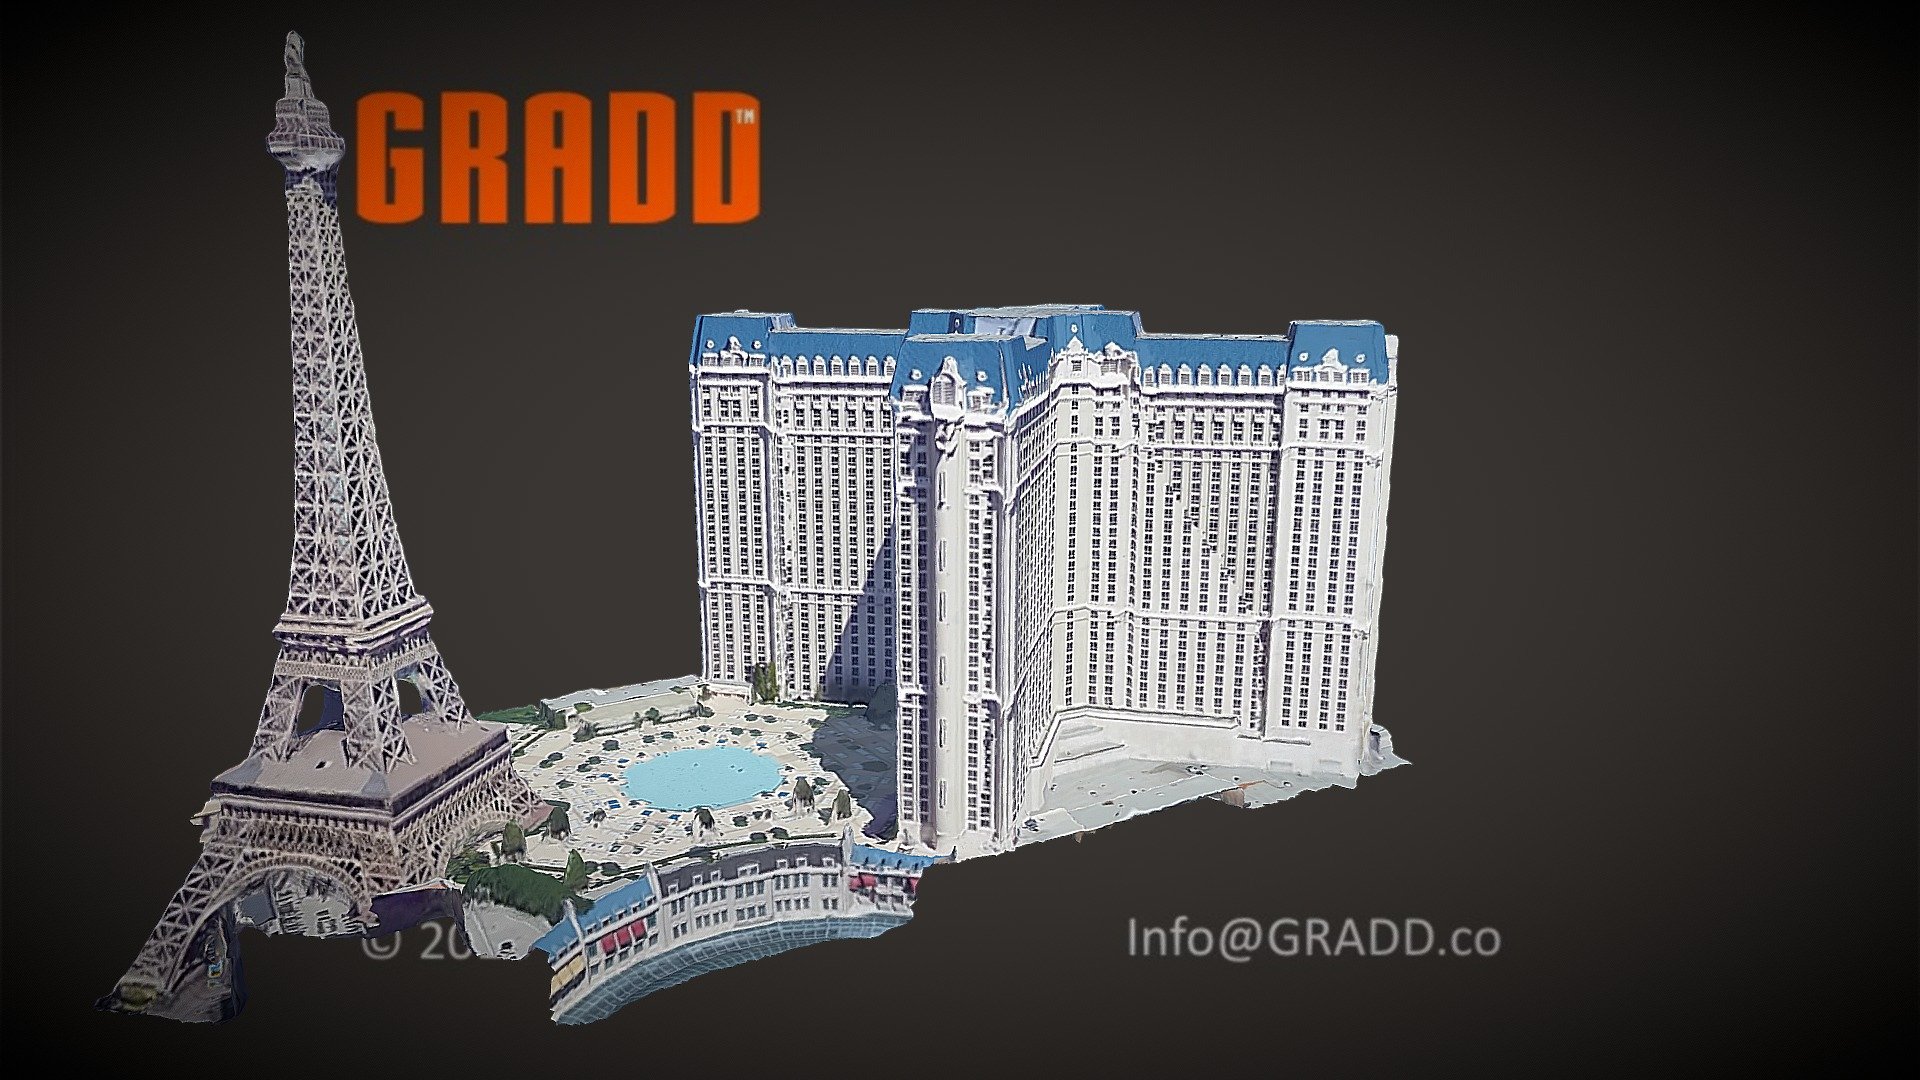 3,576 Paris Las Vegas Hotel & Casino Images, Stock Photos, 3D